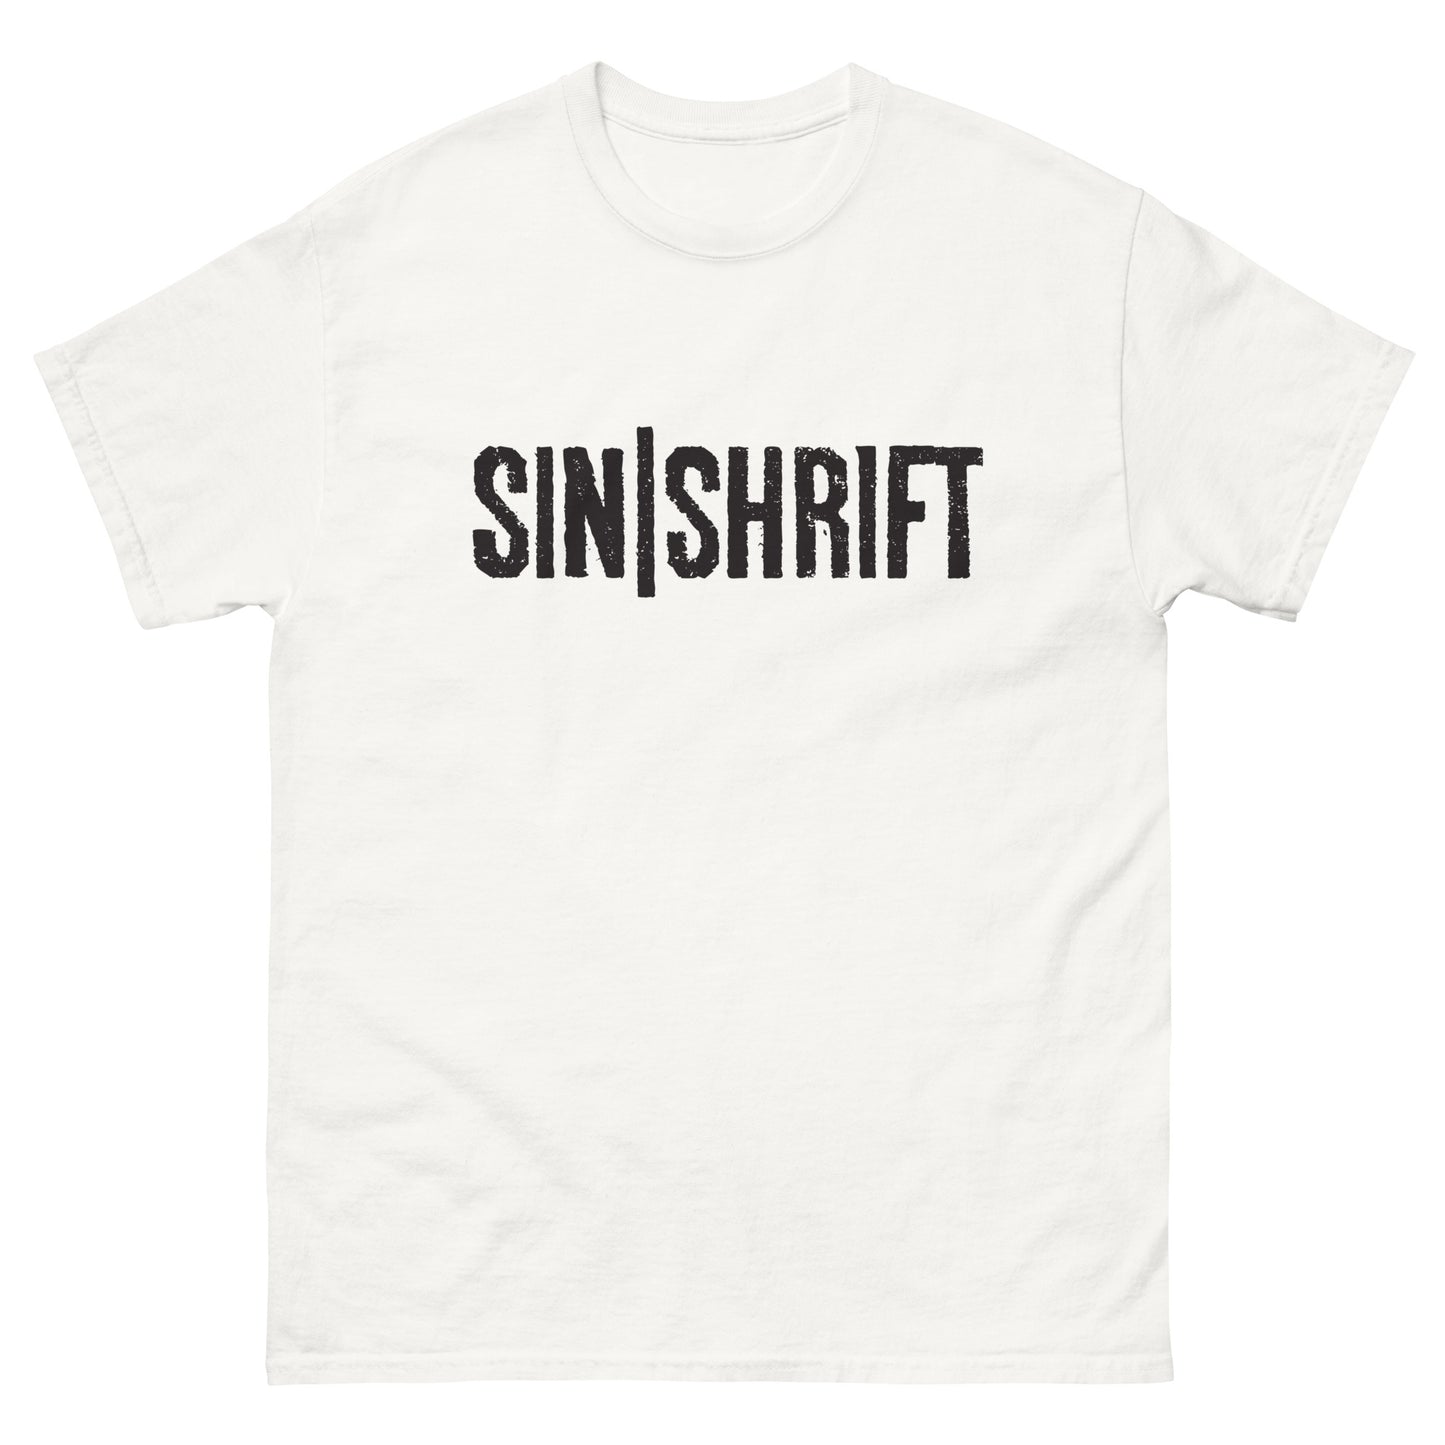 Sinshrift